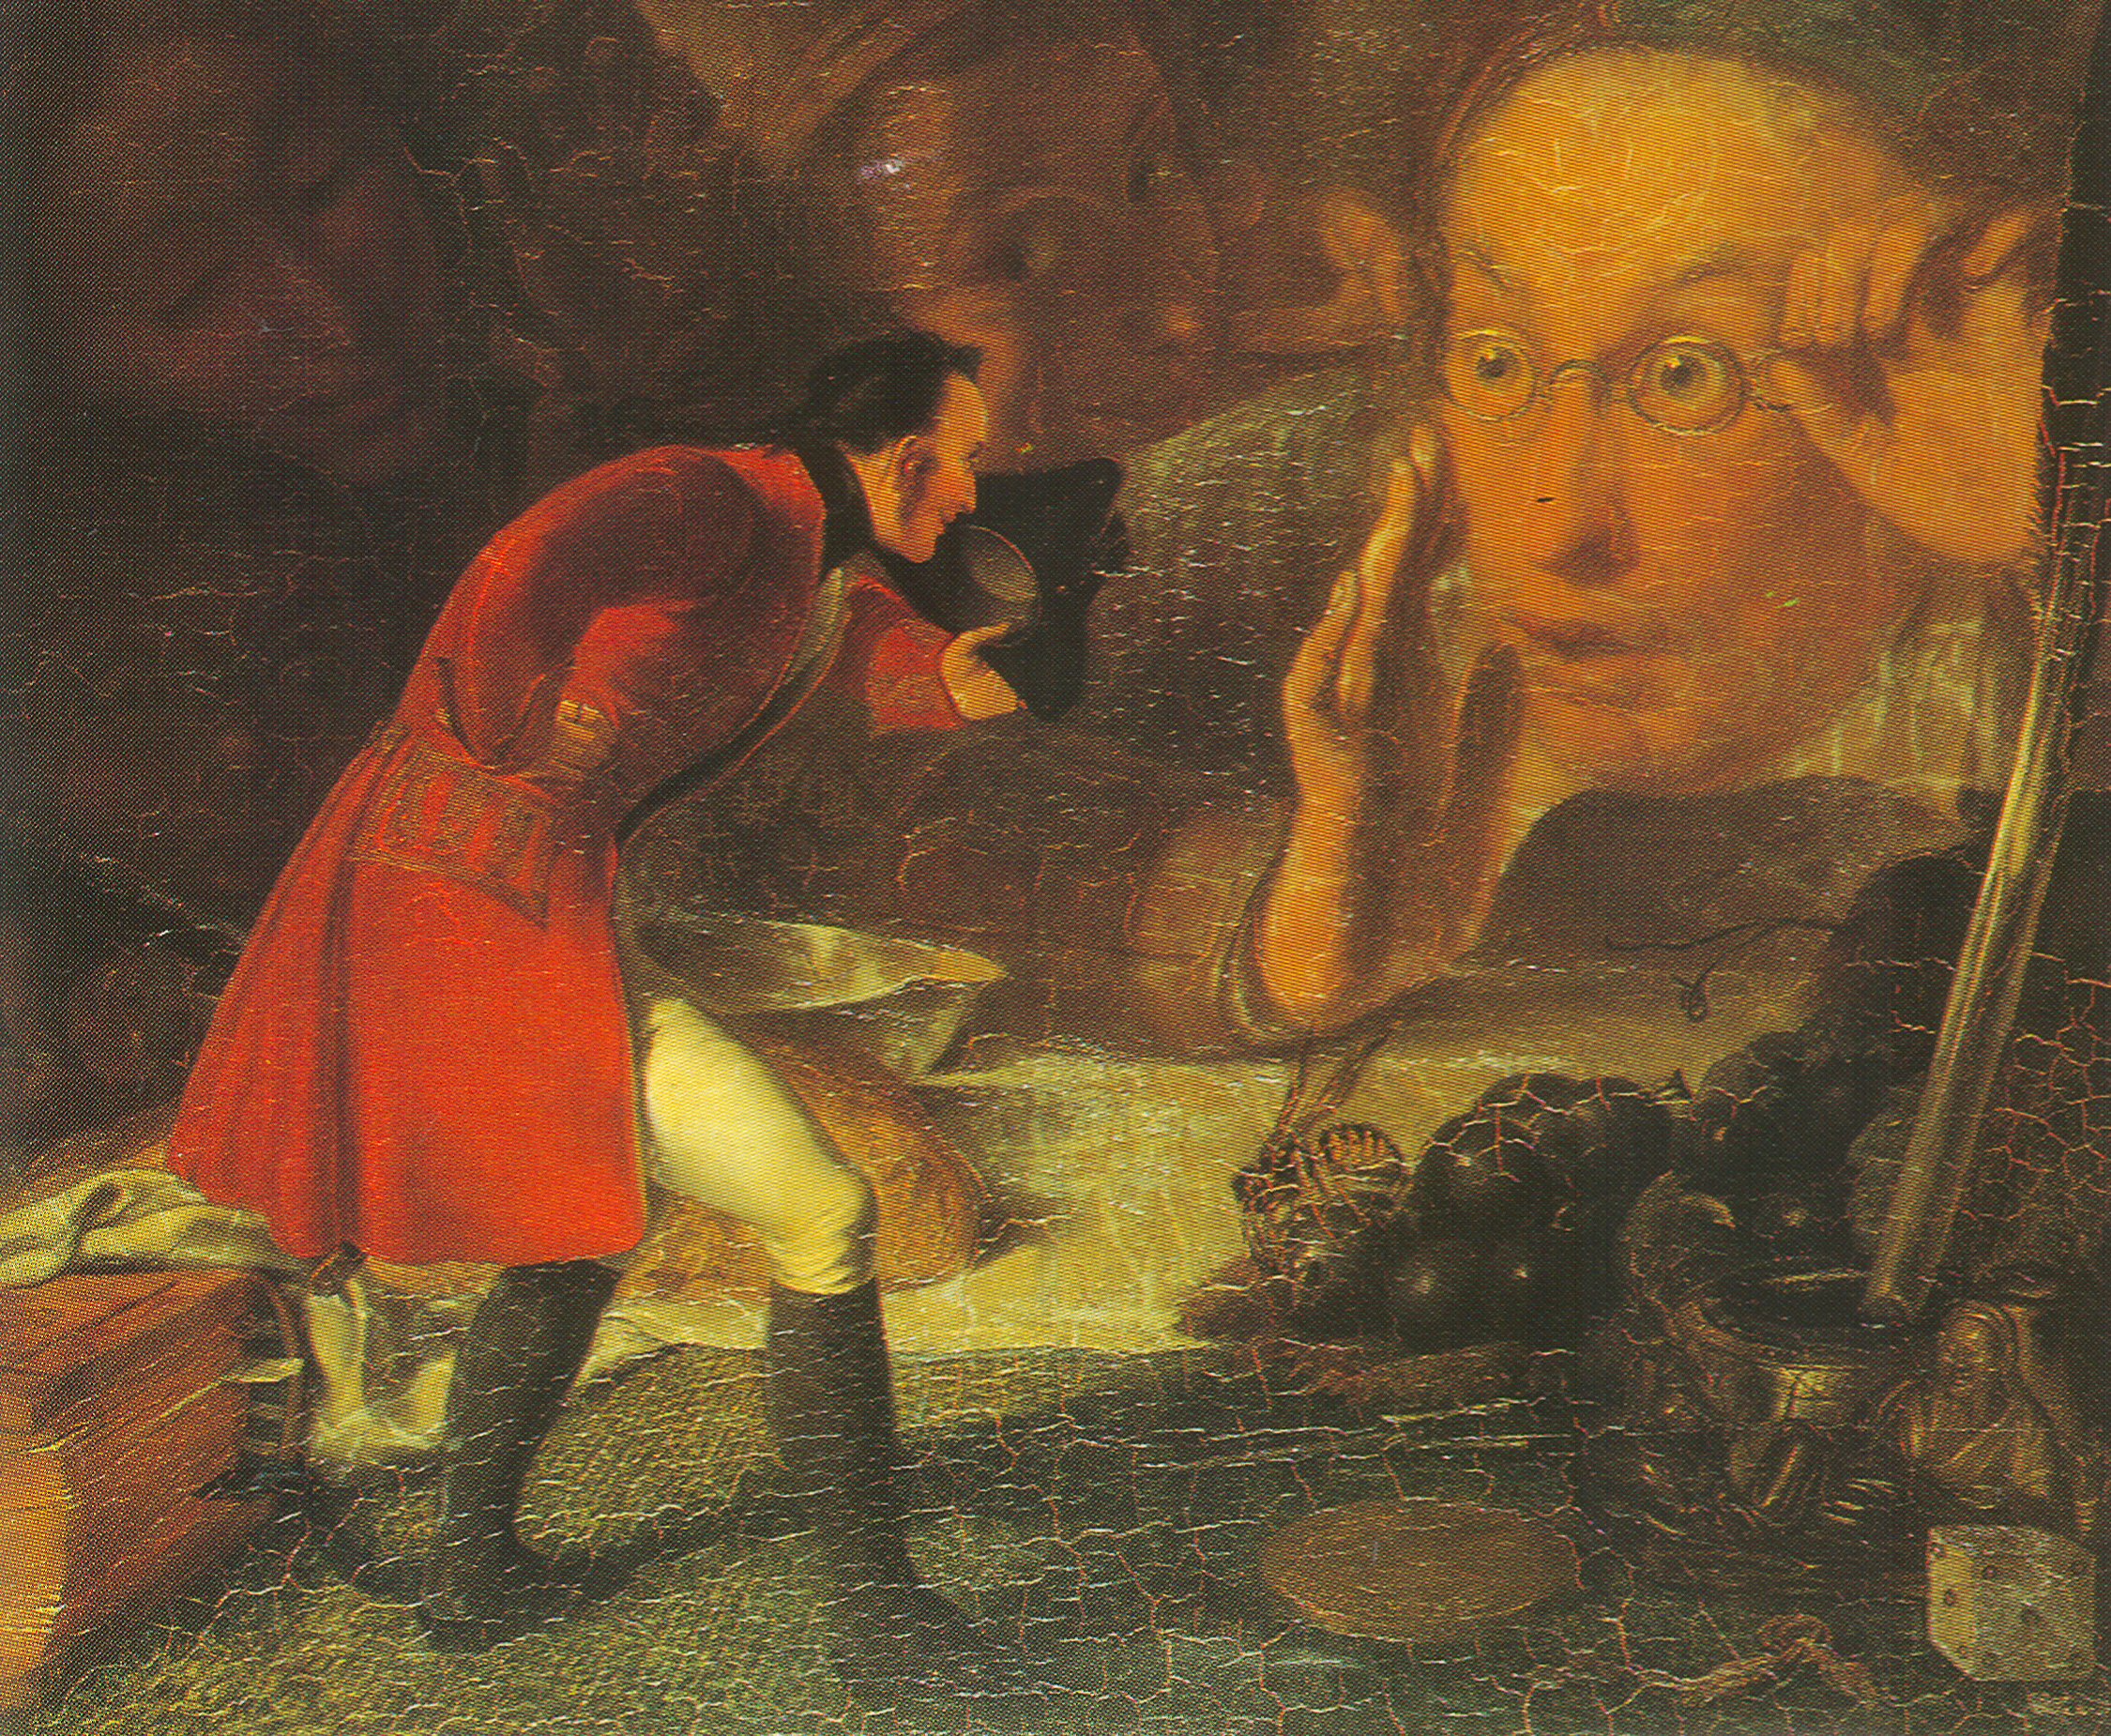  Illustration of Gulliver's Travels.